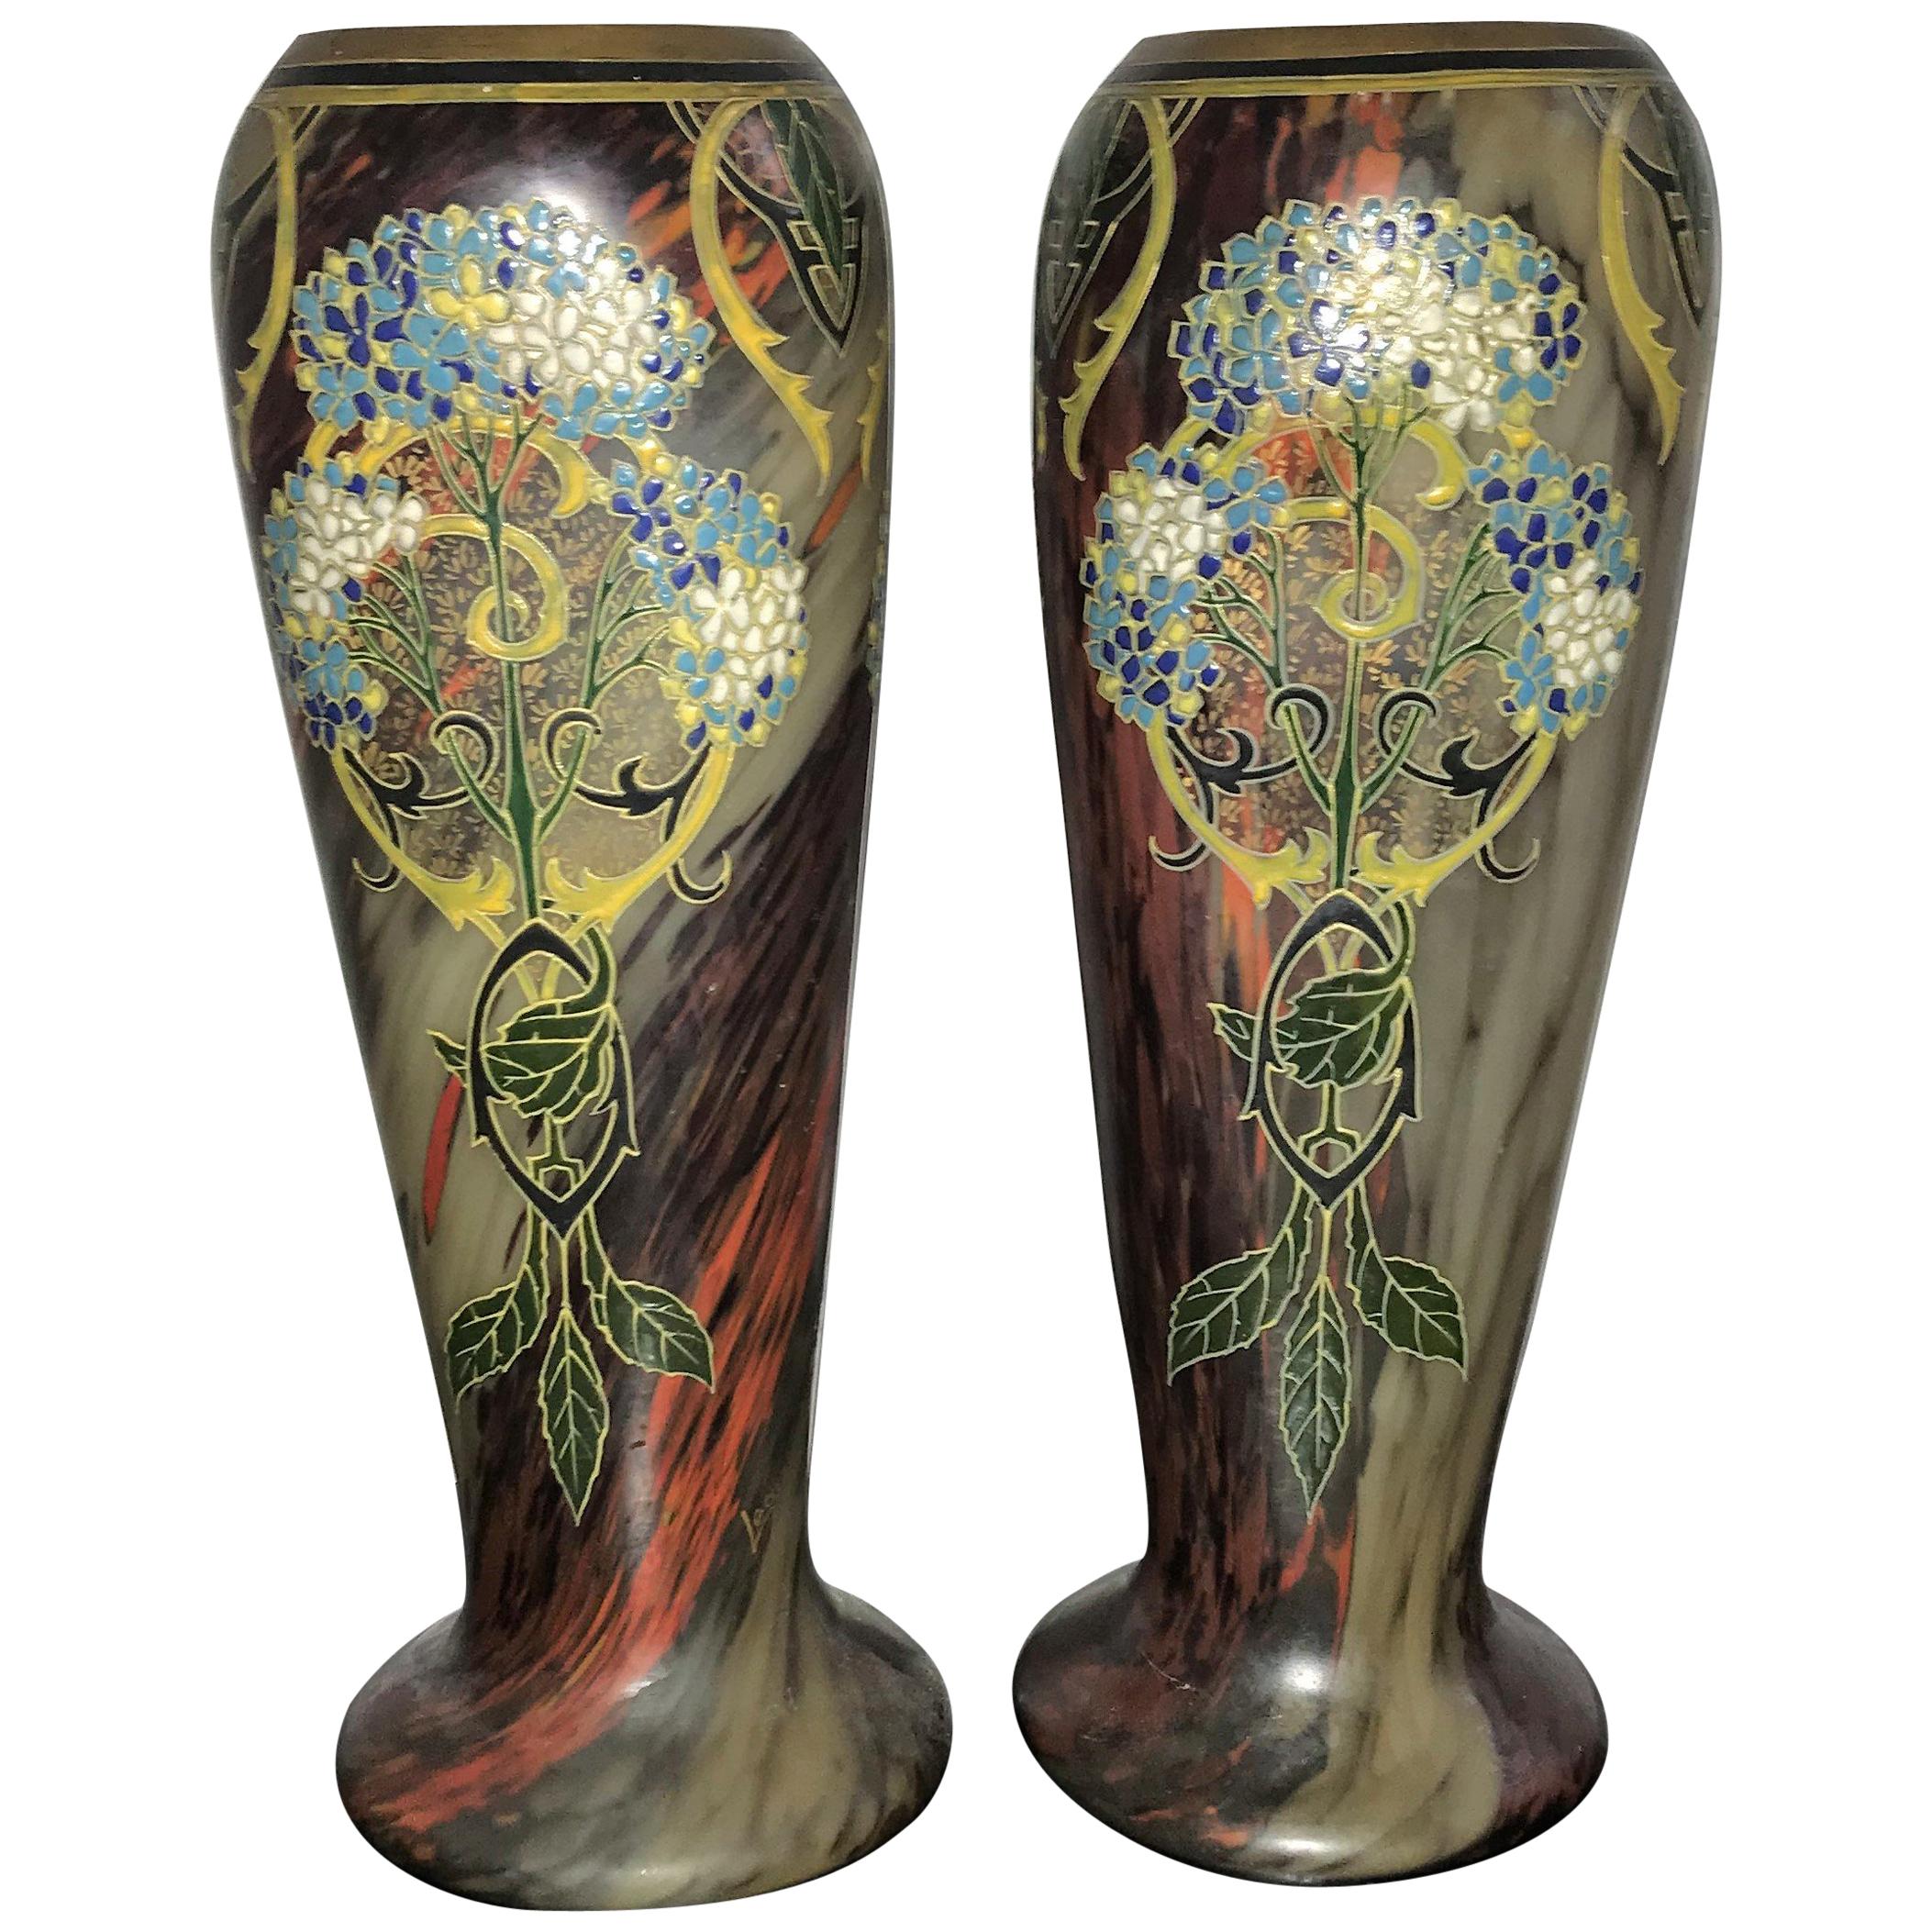 Pair of Large Art Nouveau Blown Glass and Enamel Vases by Legras, France